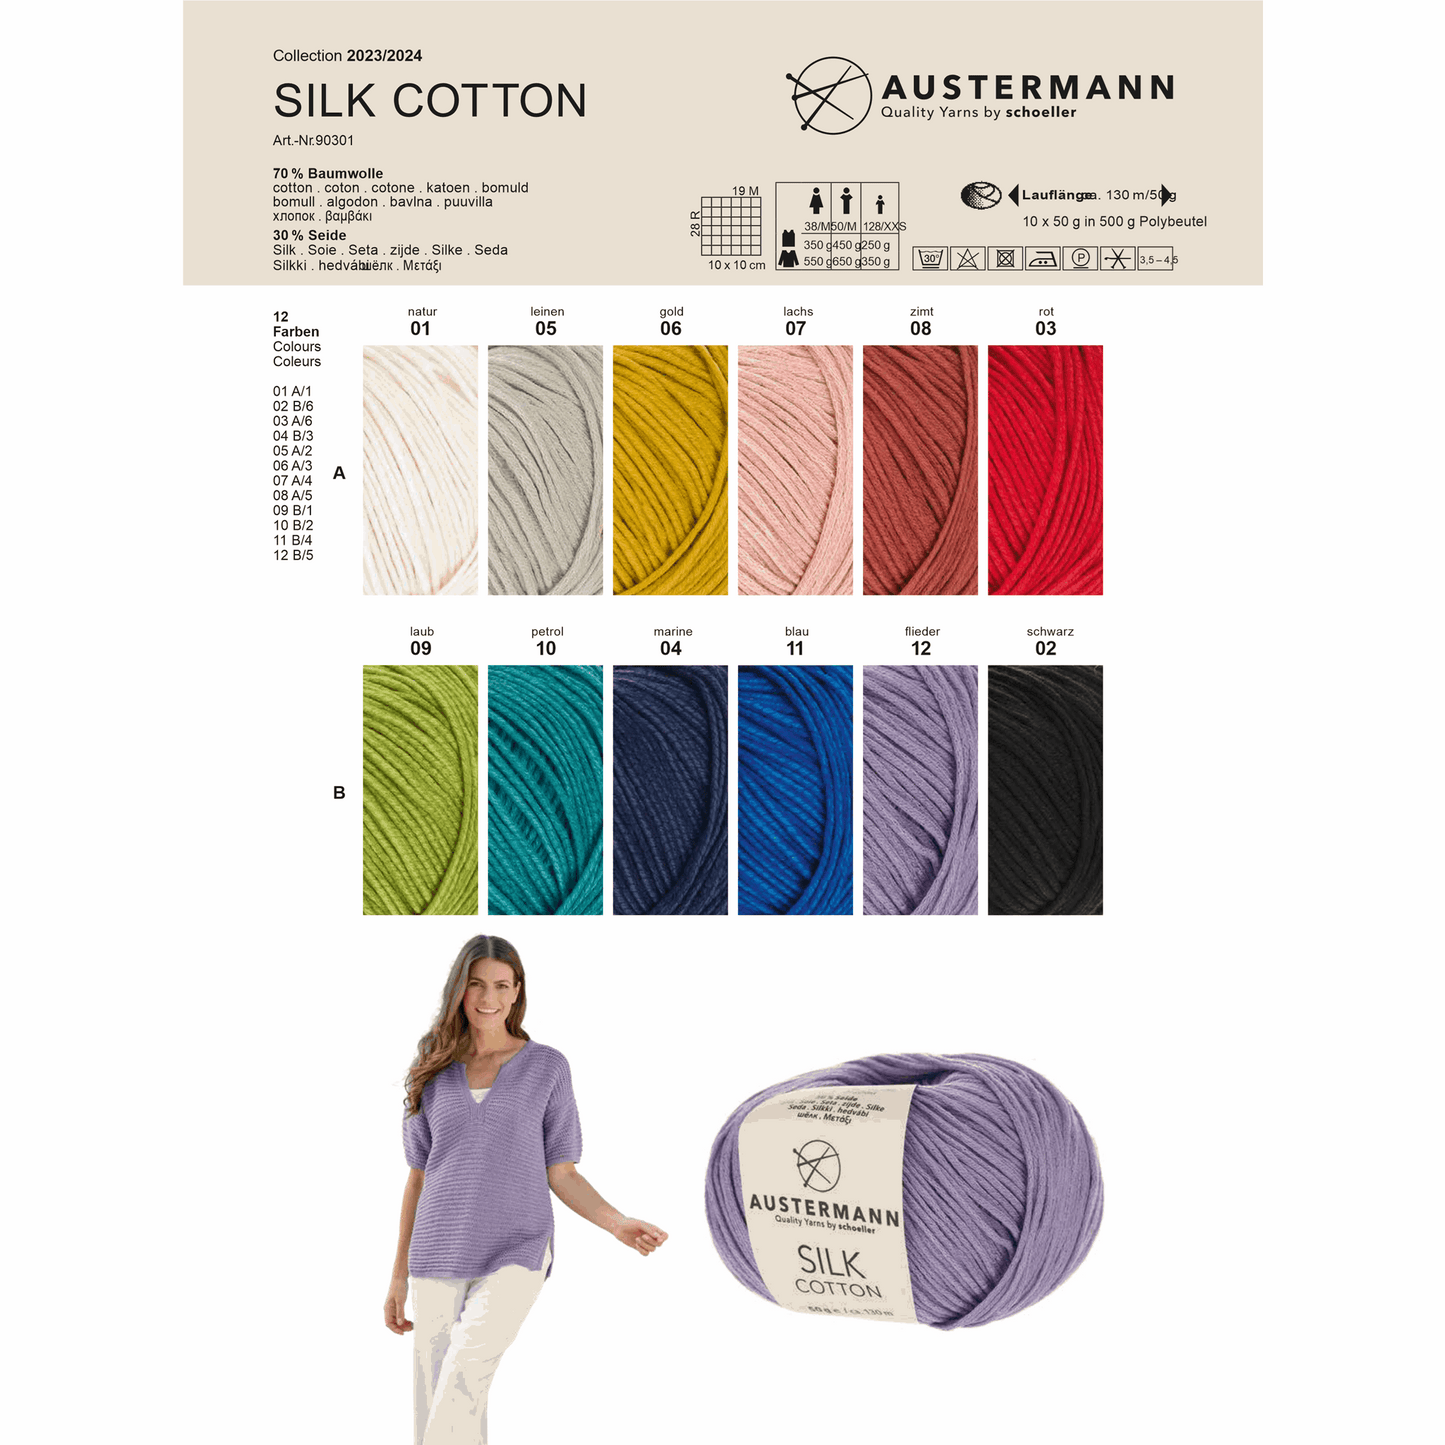 Silk Cotton 50g, 90301, Farbe 4, marine